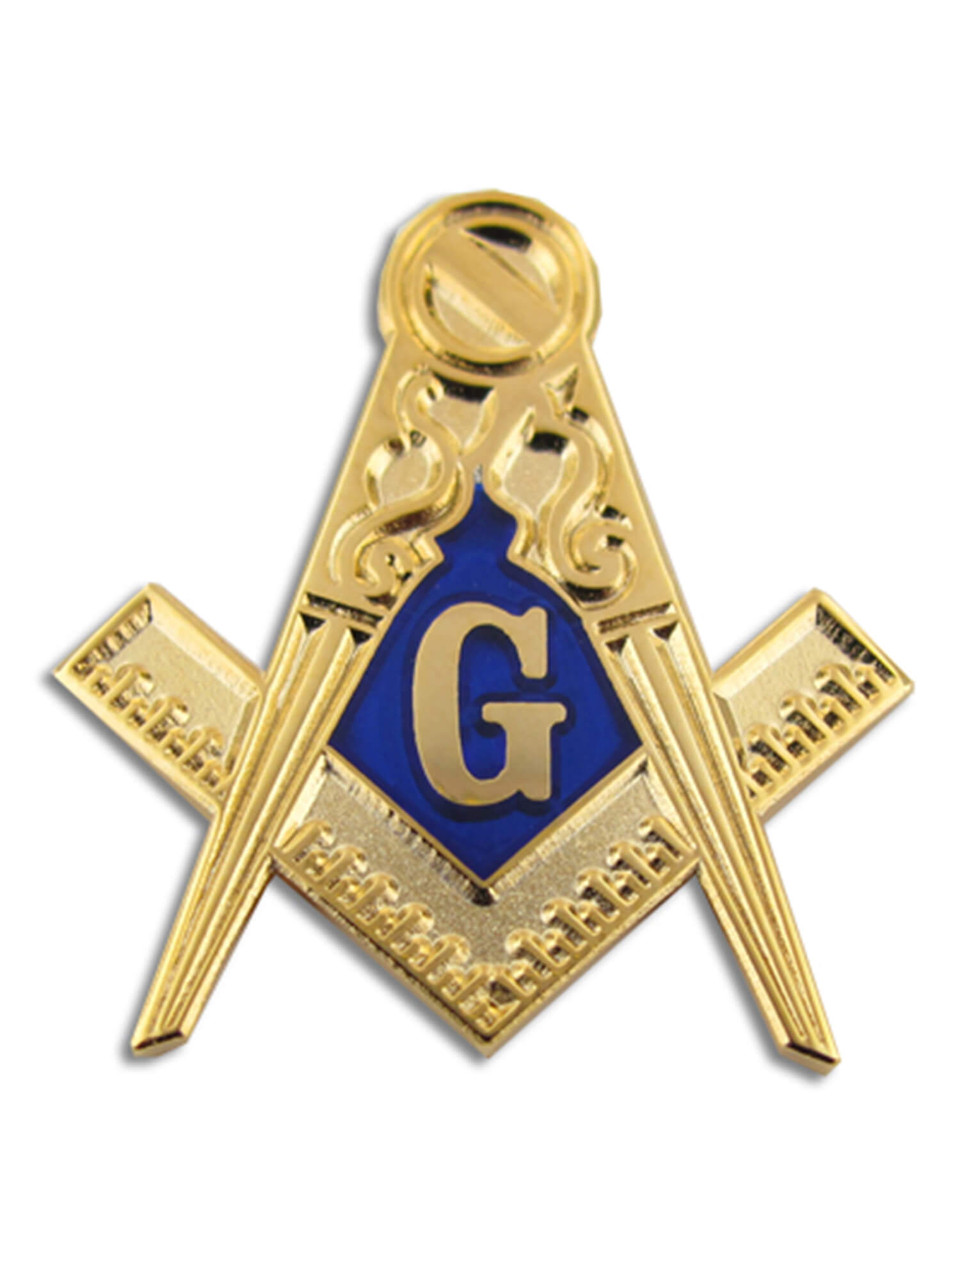 Simbolos Masonicos